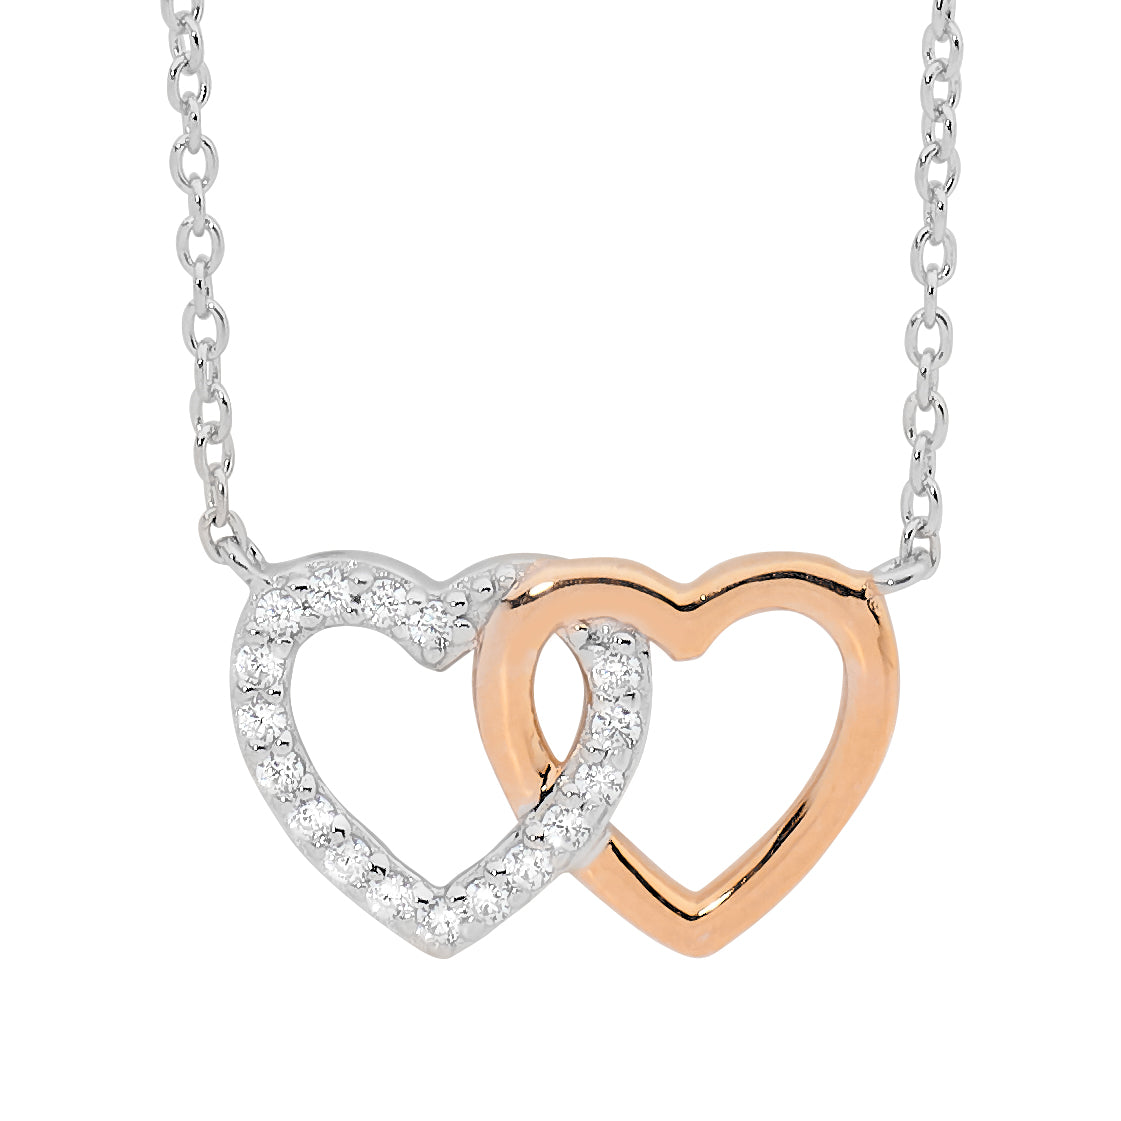 Interlocking Hearts Necklace - Silver/Rose